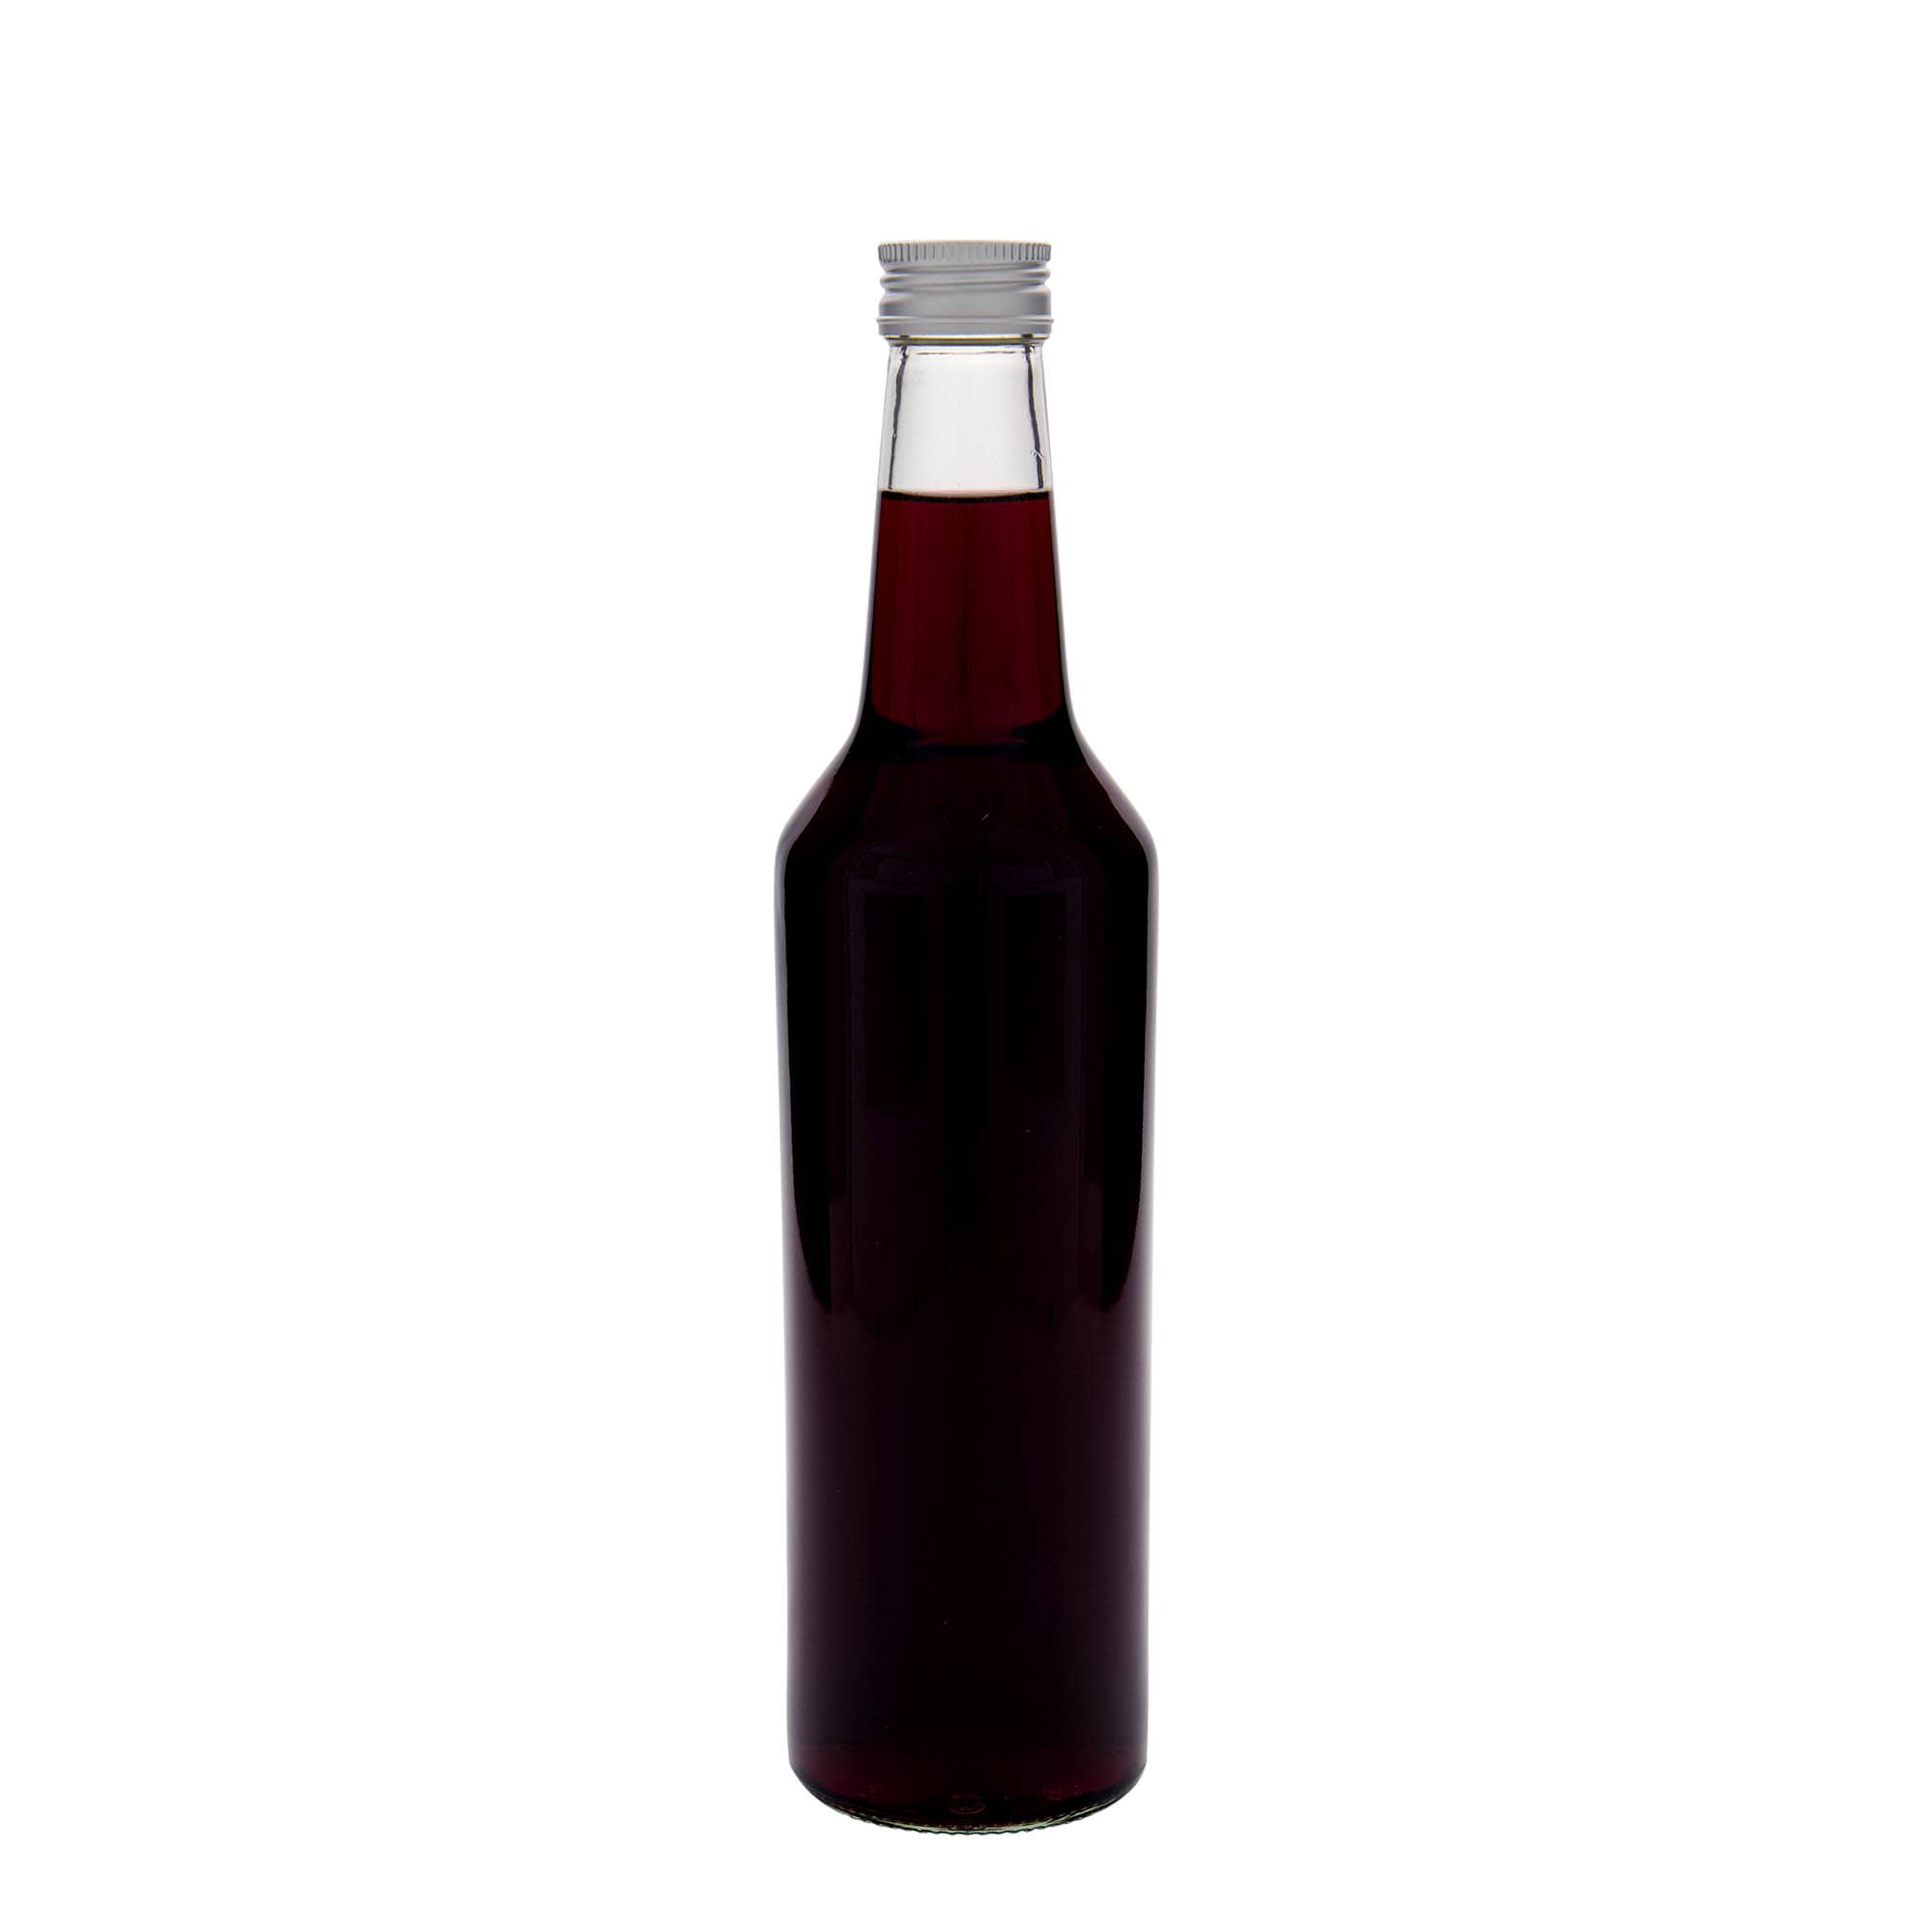 700 ml glass bottle 'Sammy', closure: PP 31.5